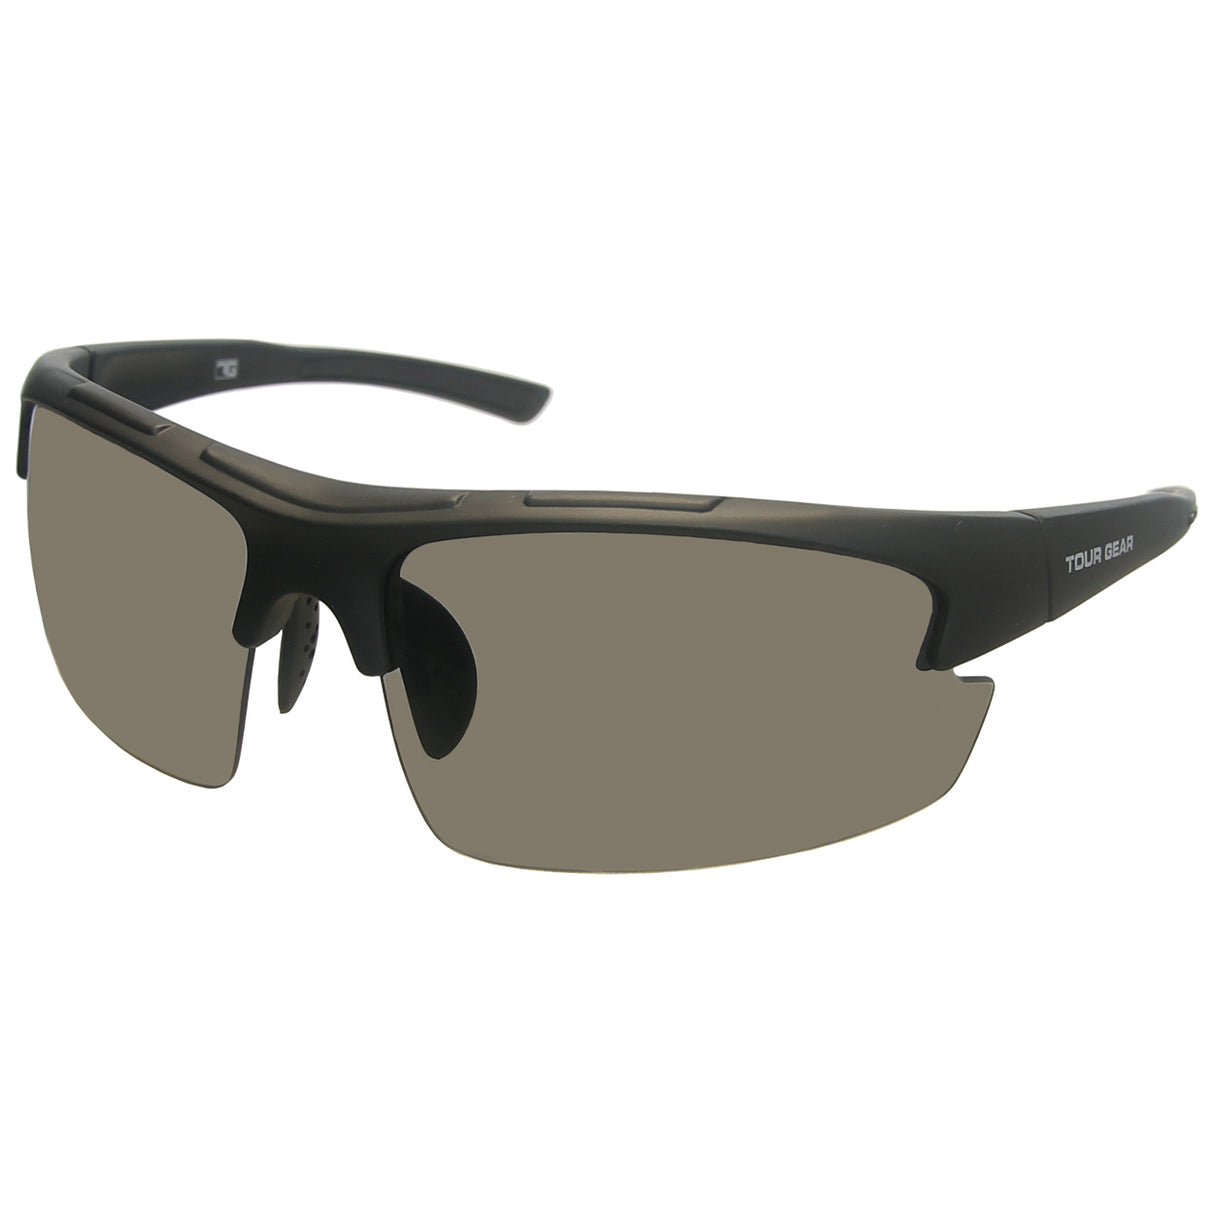 Tour Gear Sport Frame Golf Sunglasses